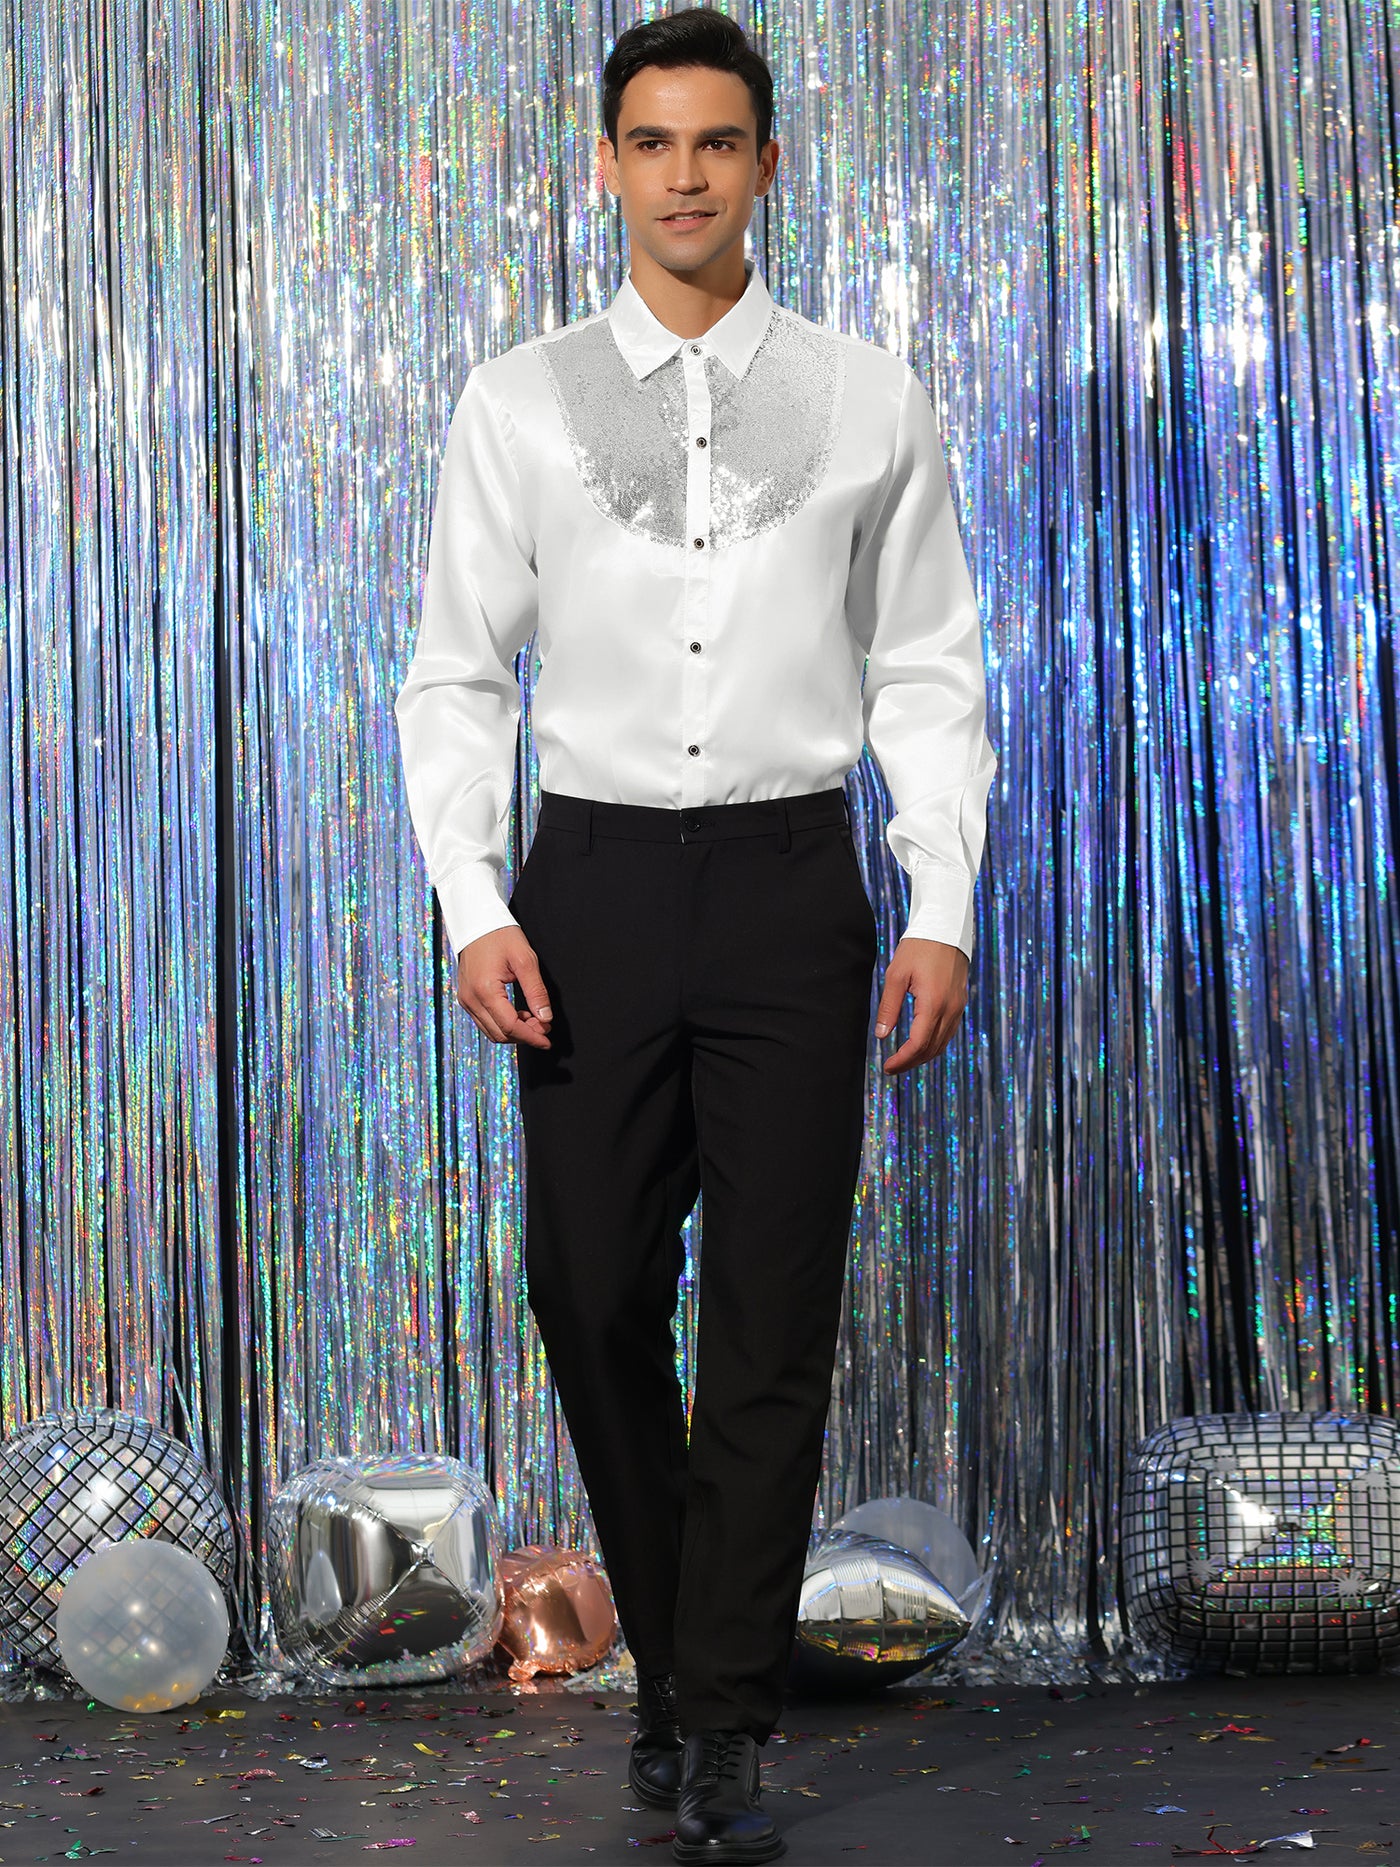 Bublédon Men's Sequin Shirt Long Sleeves Button Down Prom Party Satin Shirts